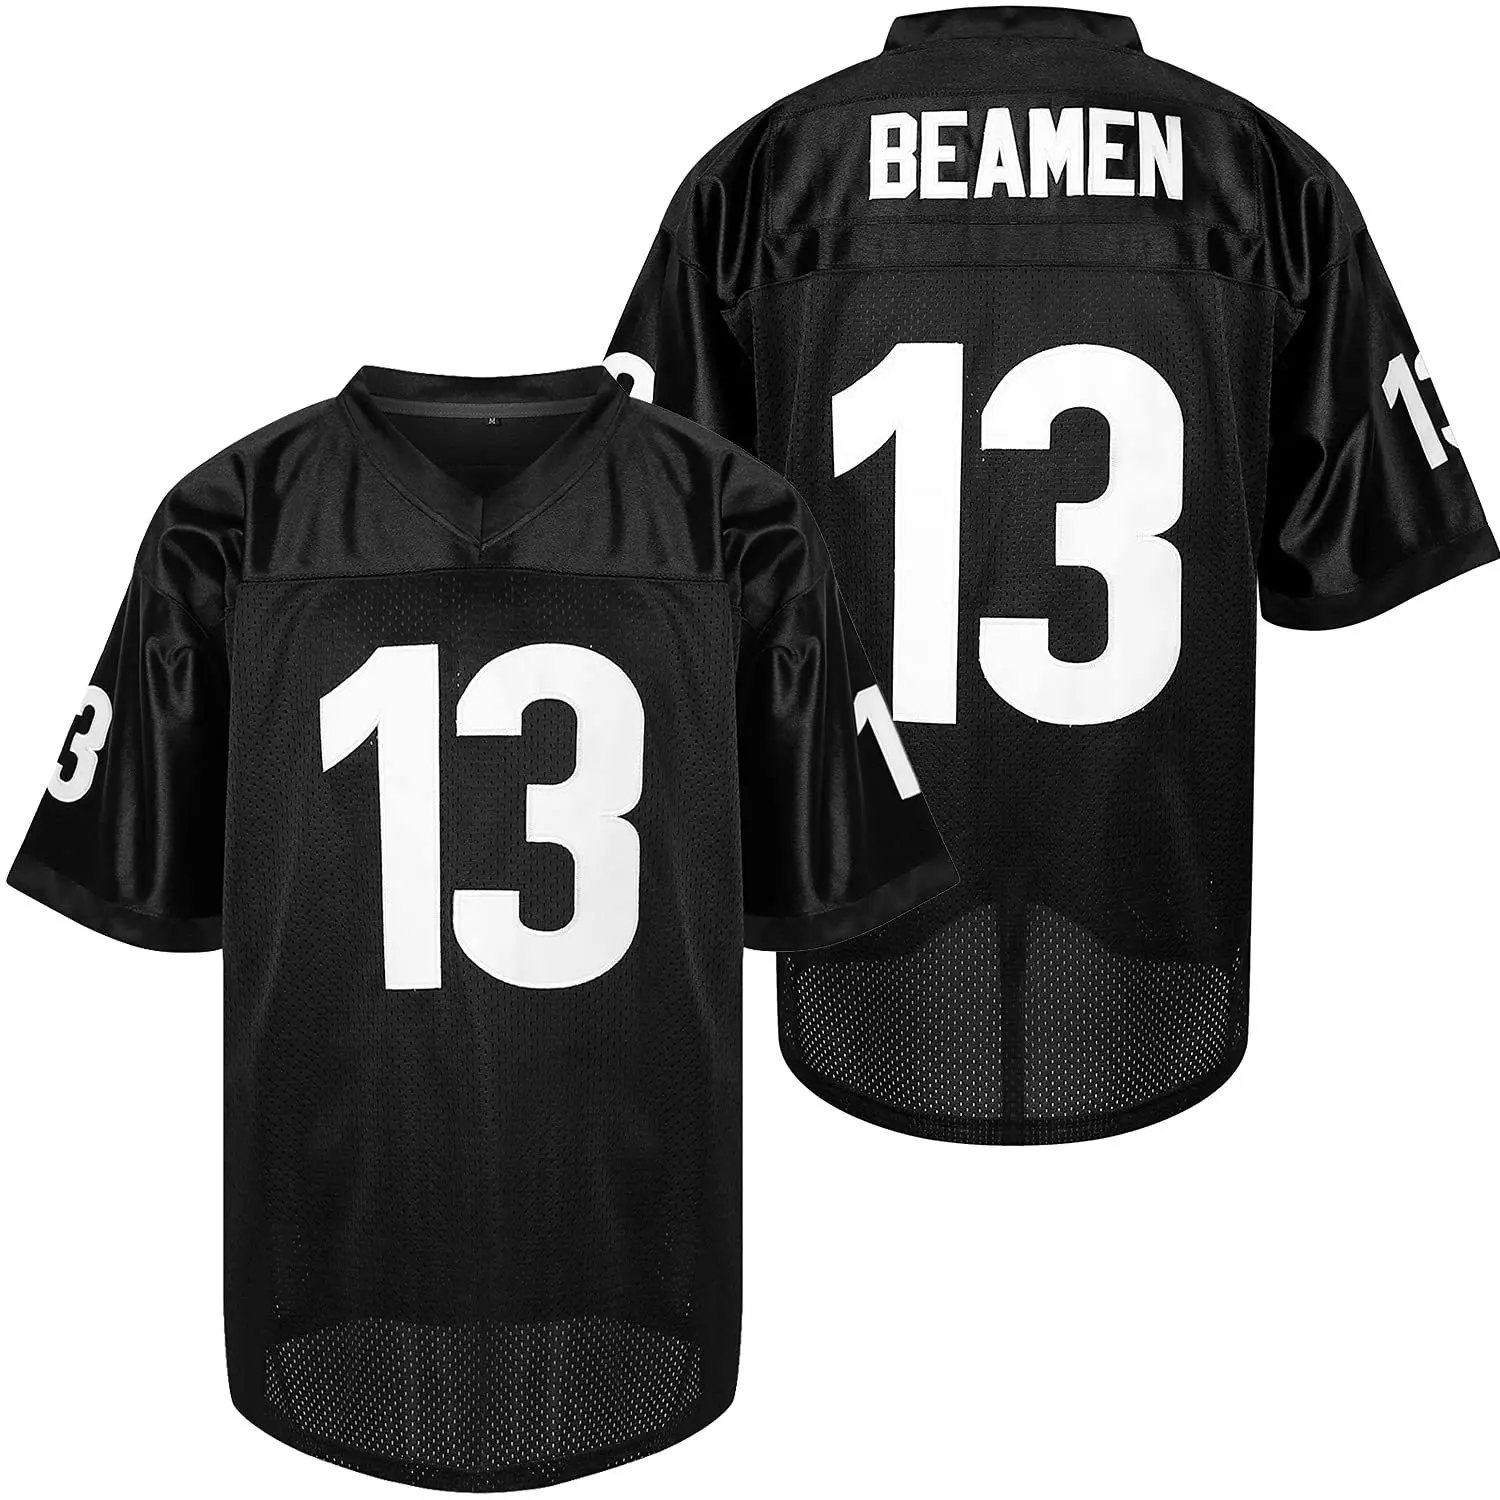 Willy Beamen #13 qualsiasi dato Sunday Sharks Movie Men Football Jersey All Stitched Black S-3XL alta qualità